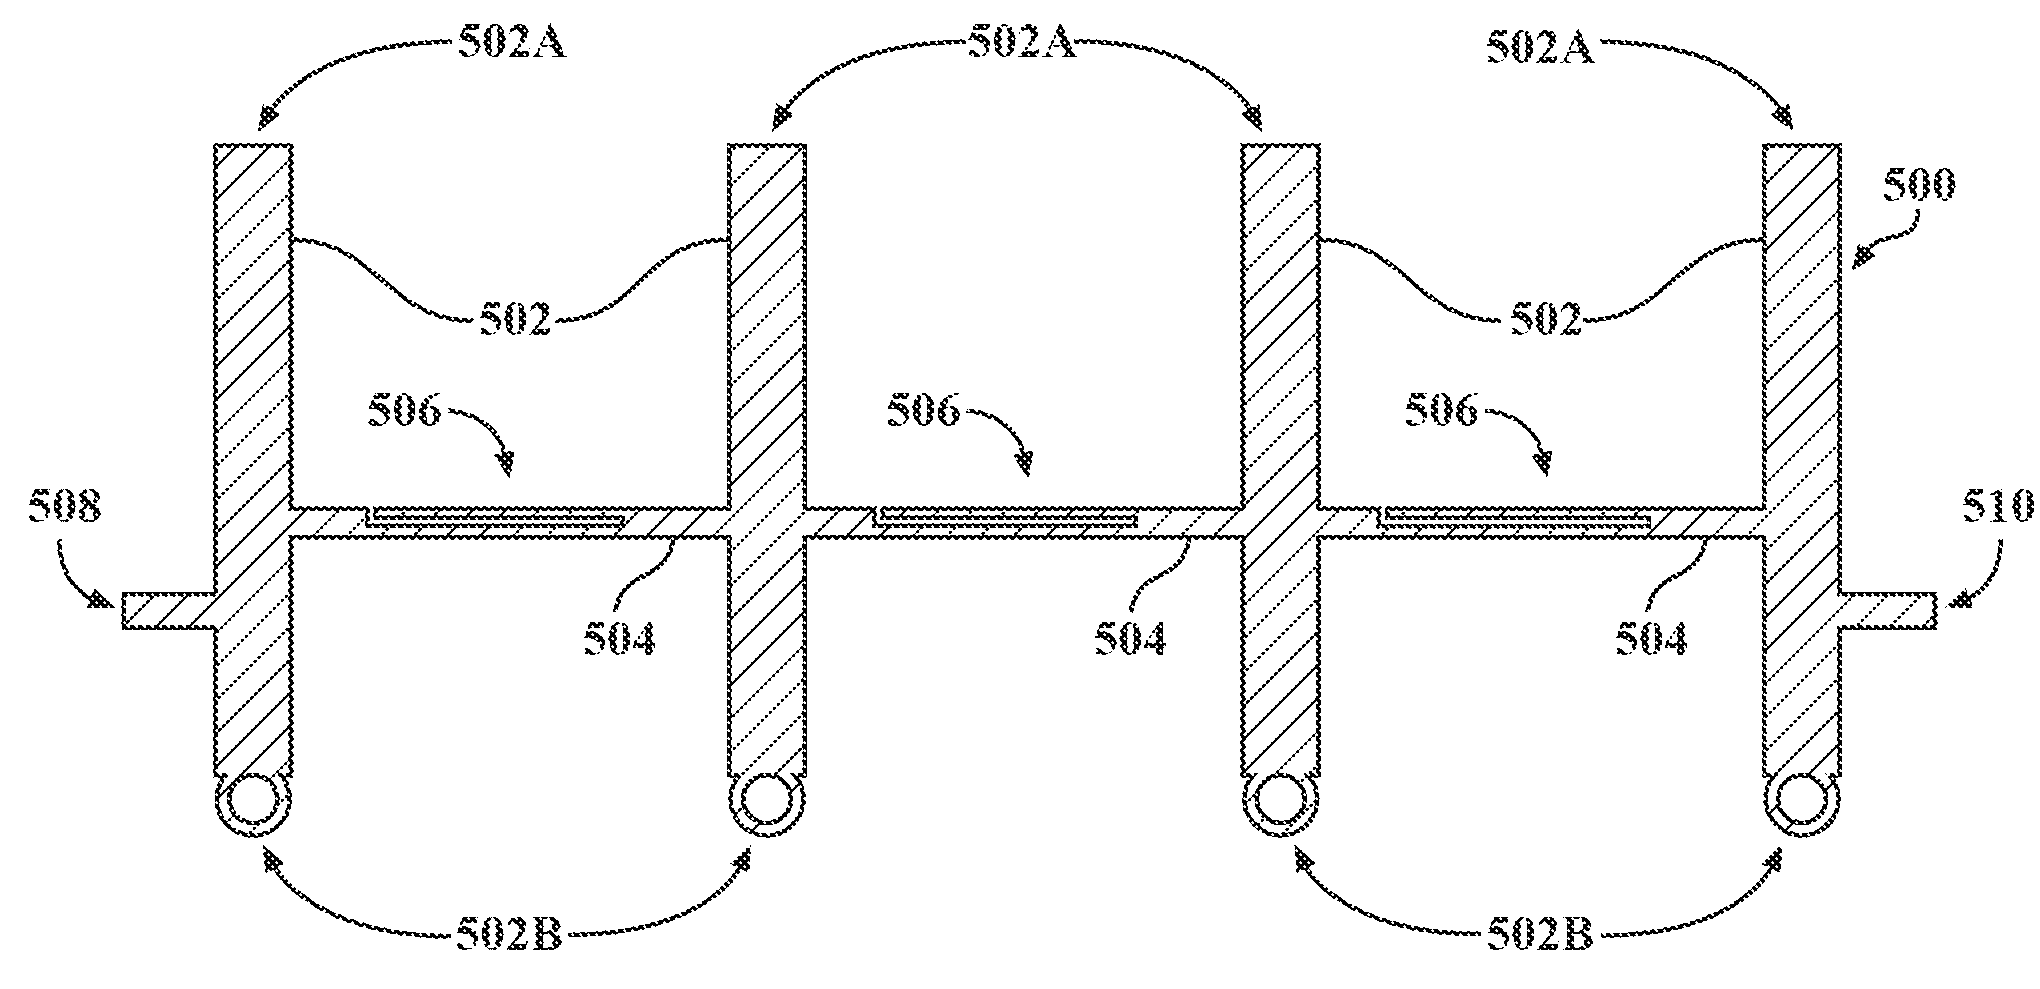 Compact bandpass filter with no third order response